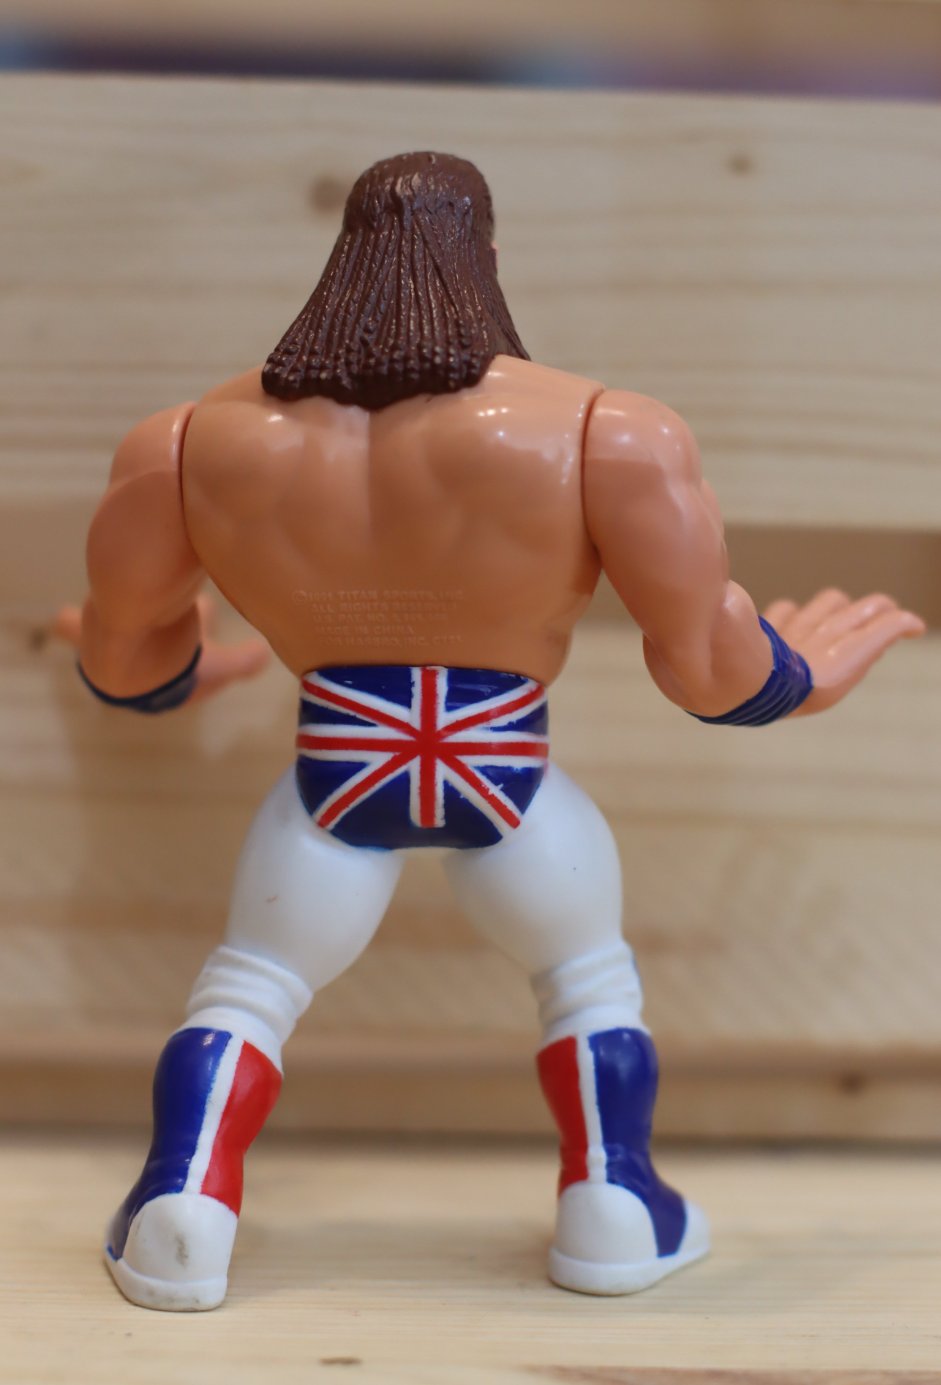 1992 Hasbro The British Bulldog Union Jack Trunks Loose WWF Wrestling Figure Mint!